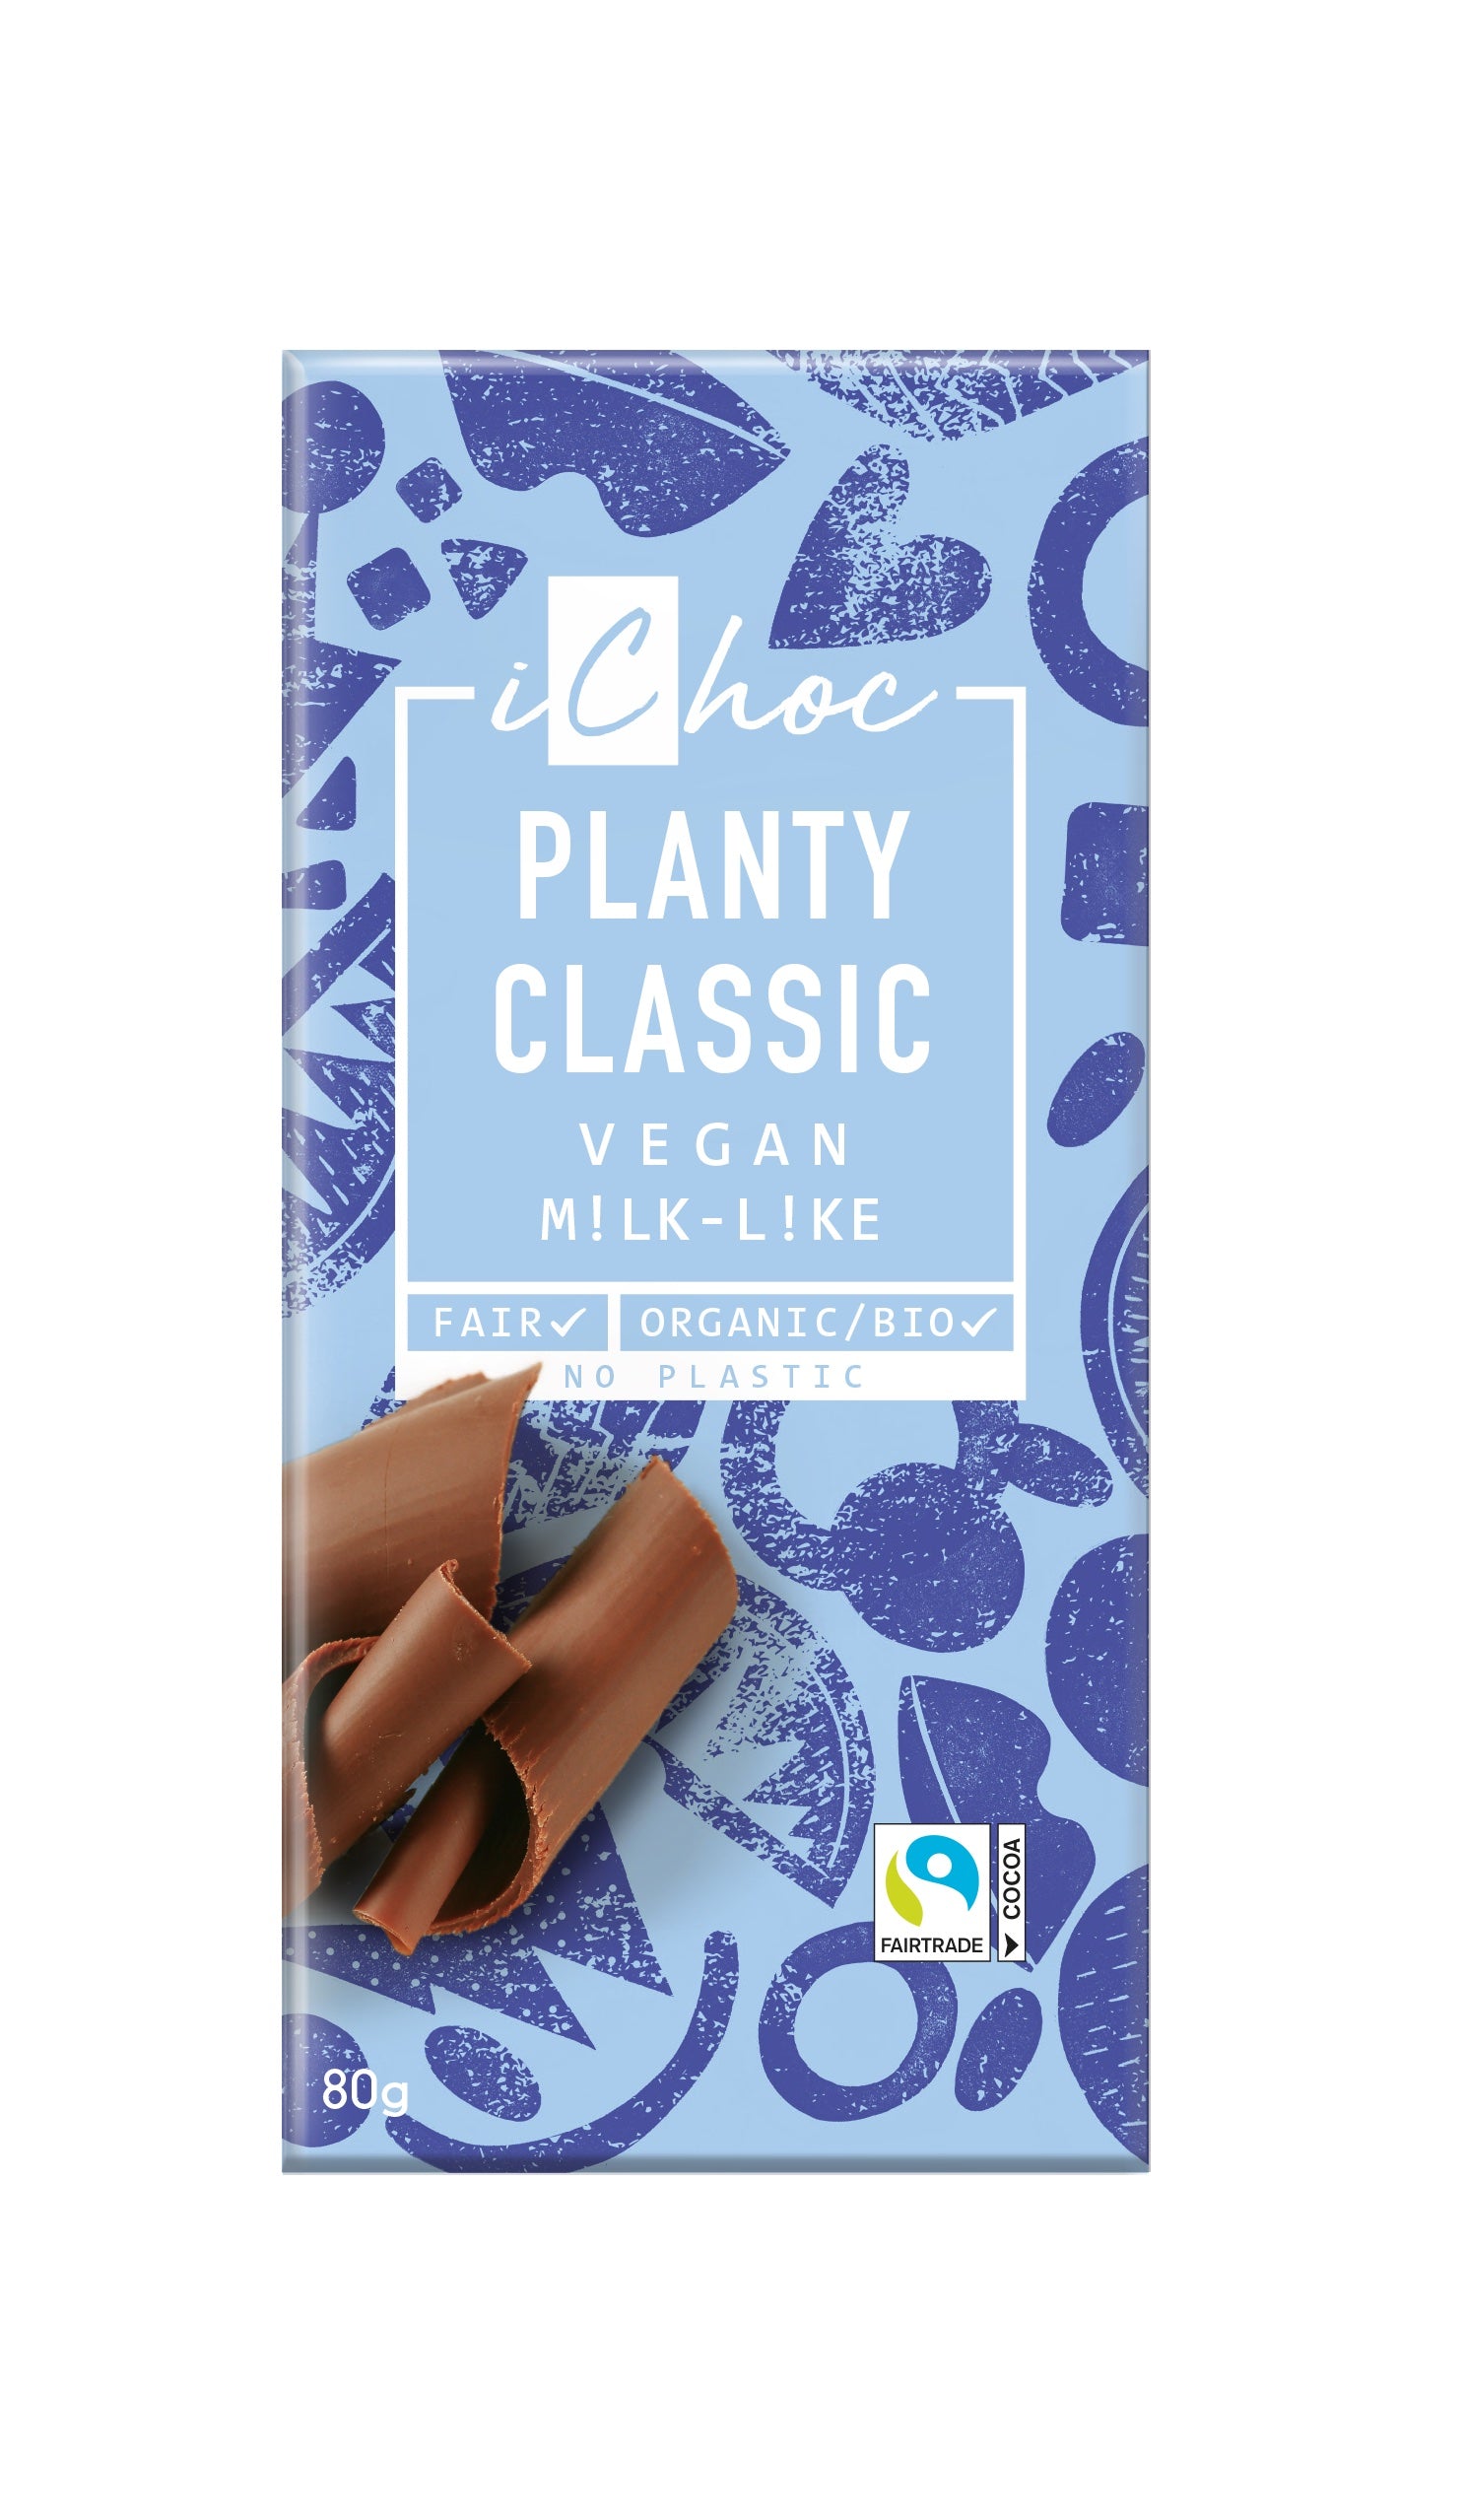 Planty Classic - Fairtrade and Vegan